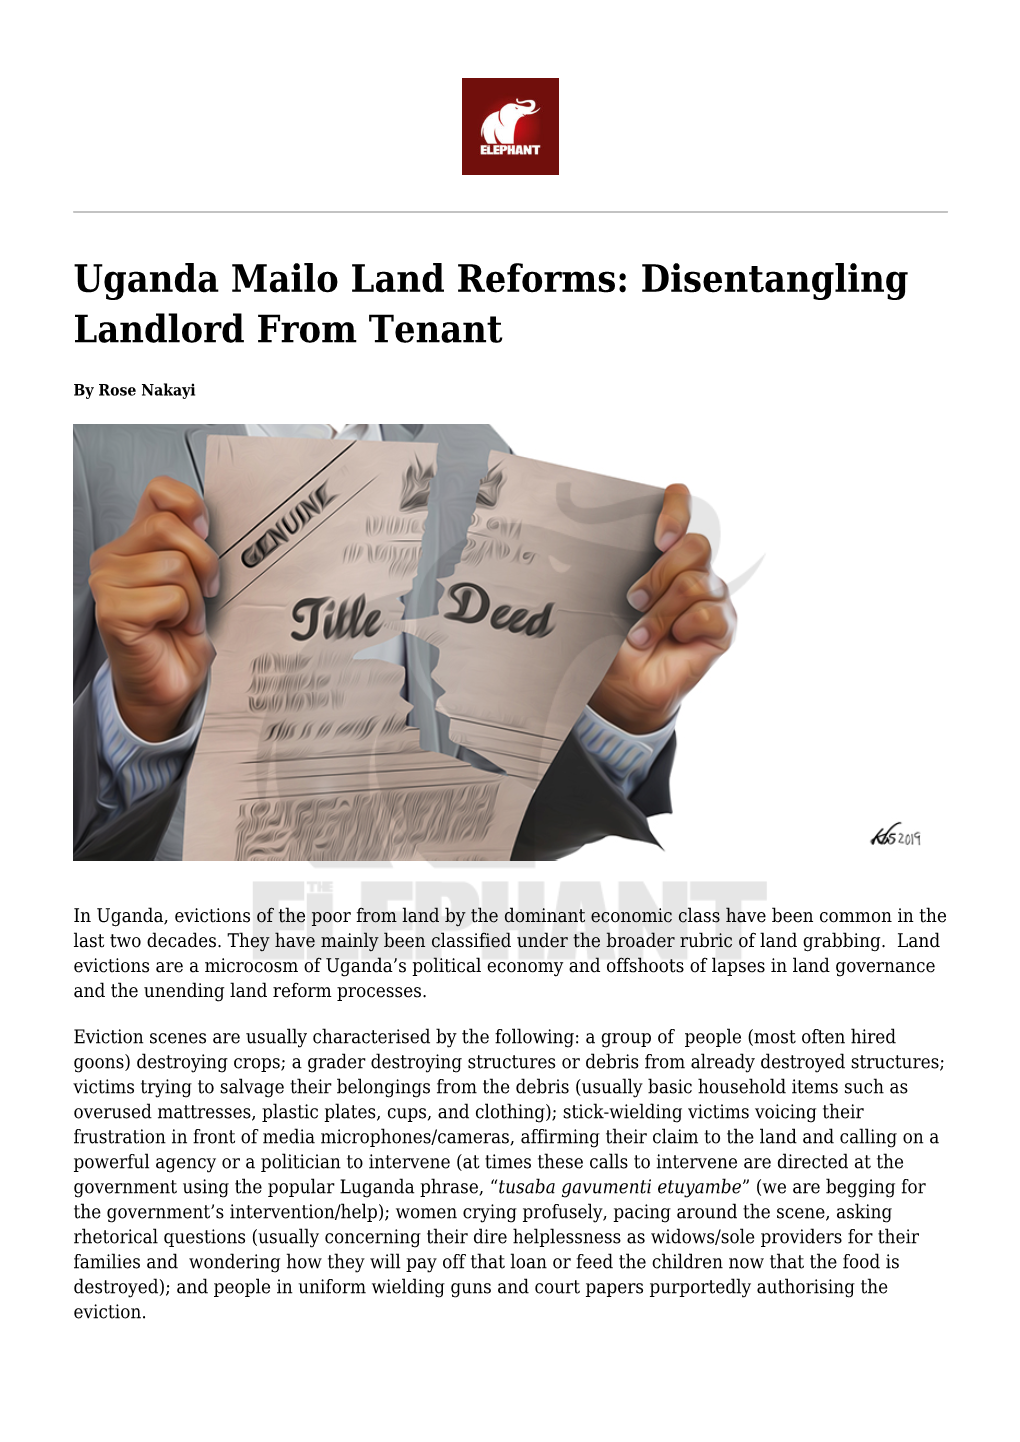 Uganda Mailo Land Reforms: Disentangling Landlord from Tenant